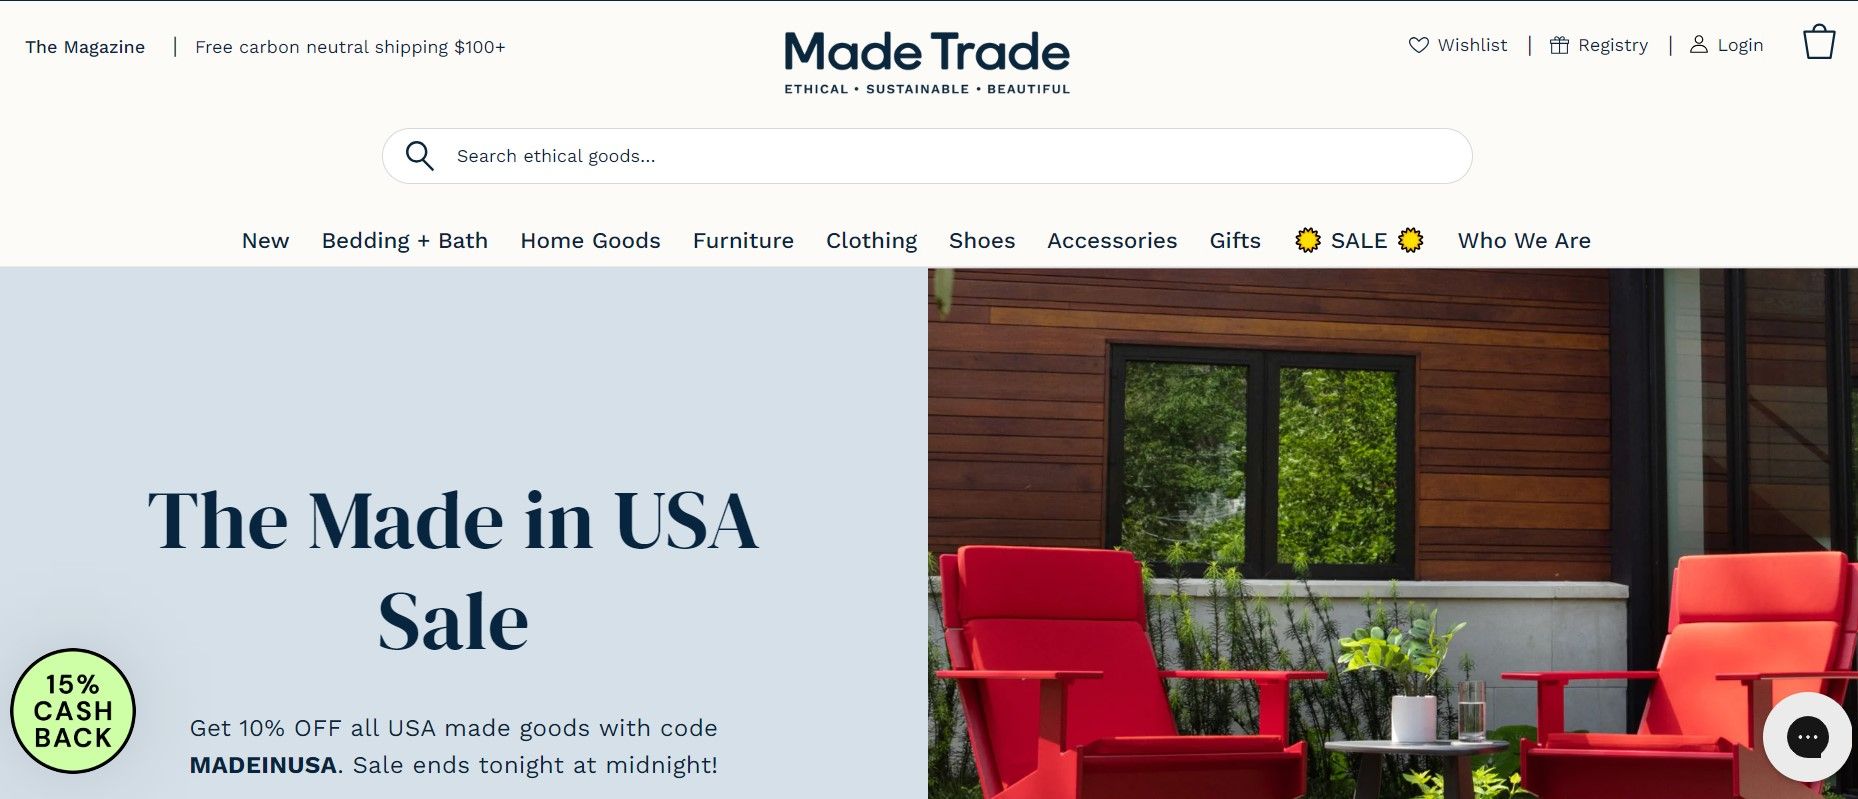 Made Trade homepage